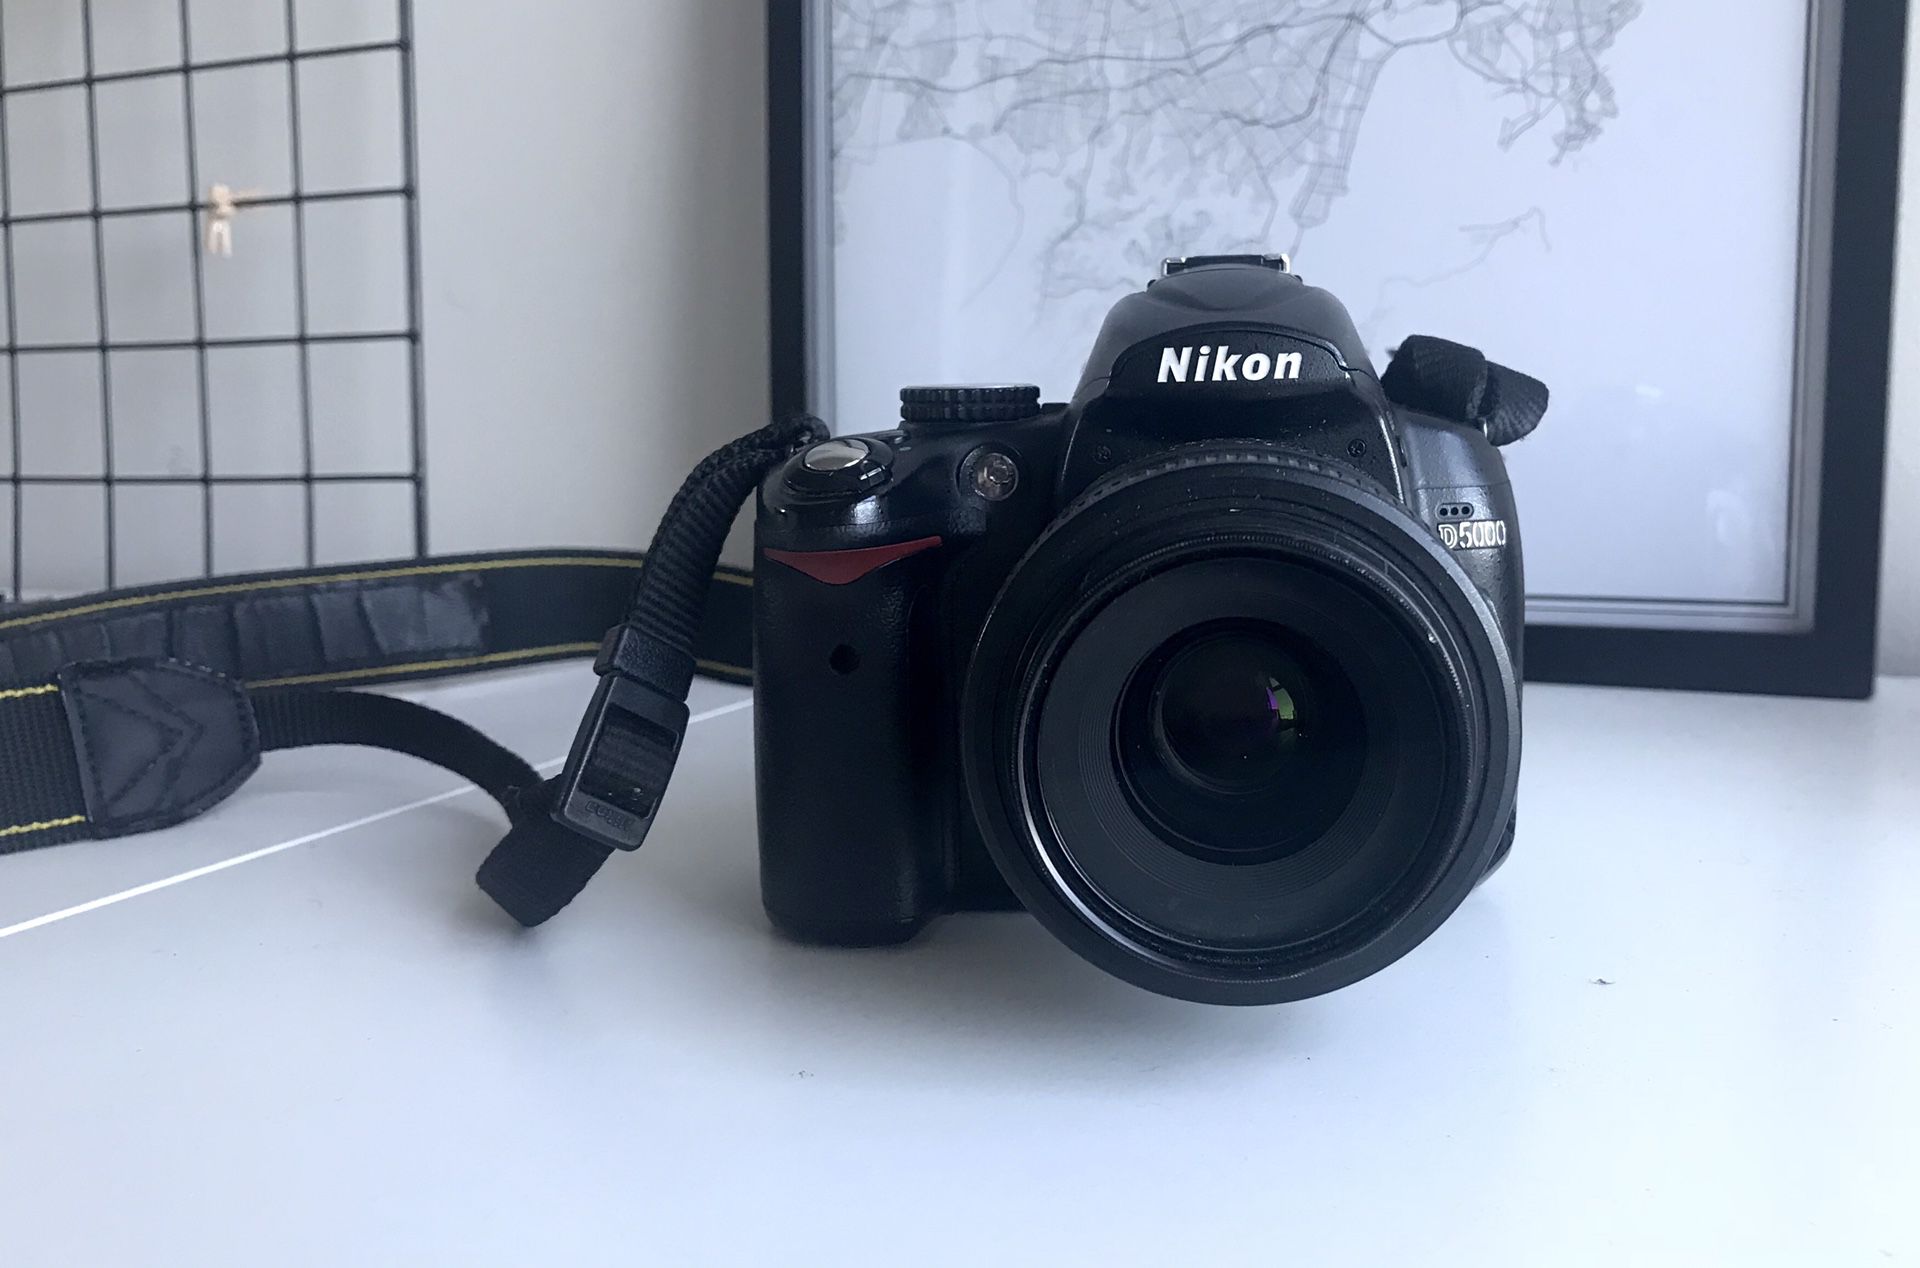 Nikon D5000 DSLR Camera with 35mm f/1.8 lens